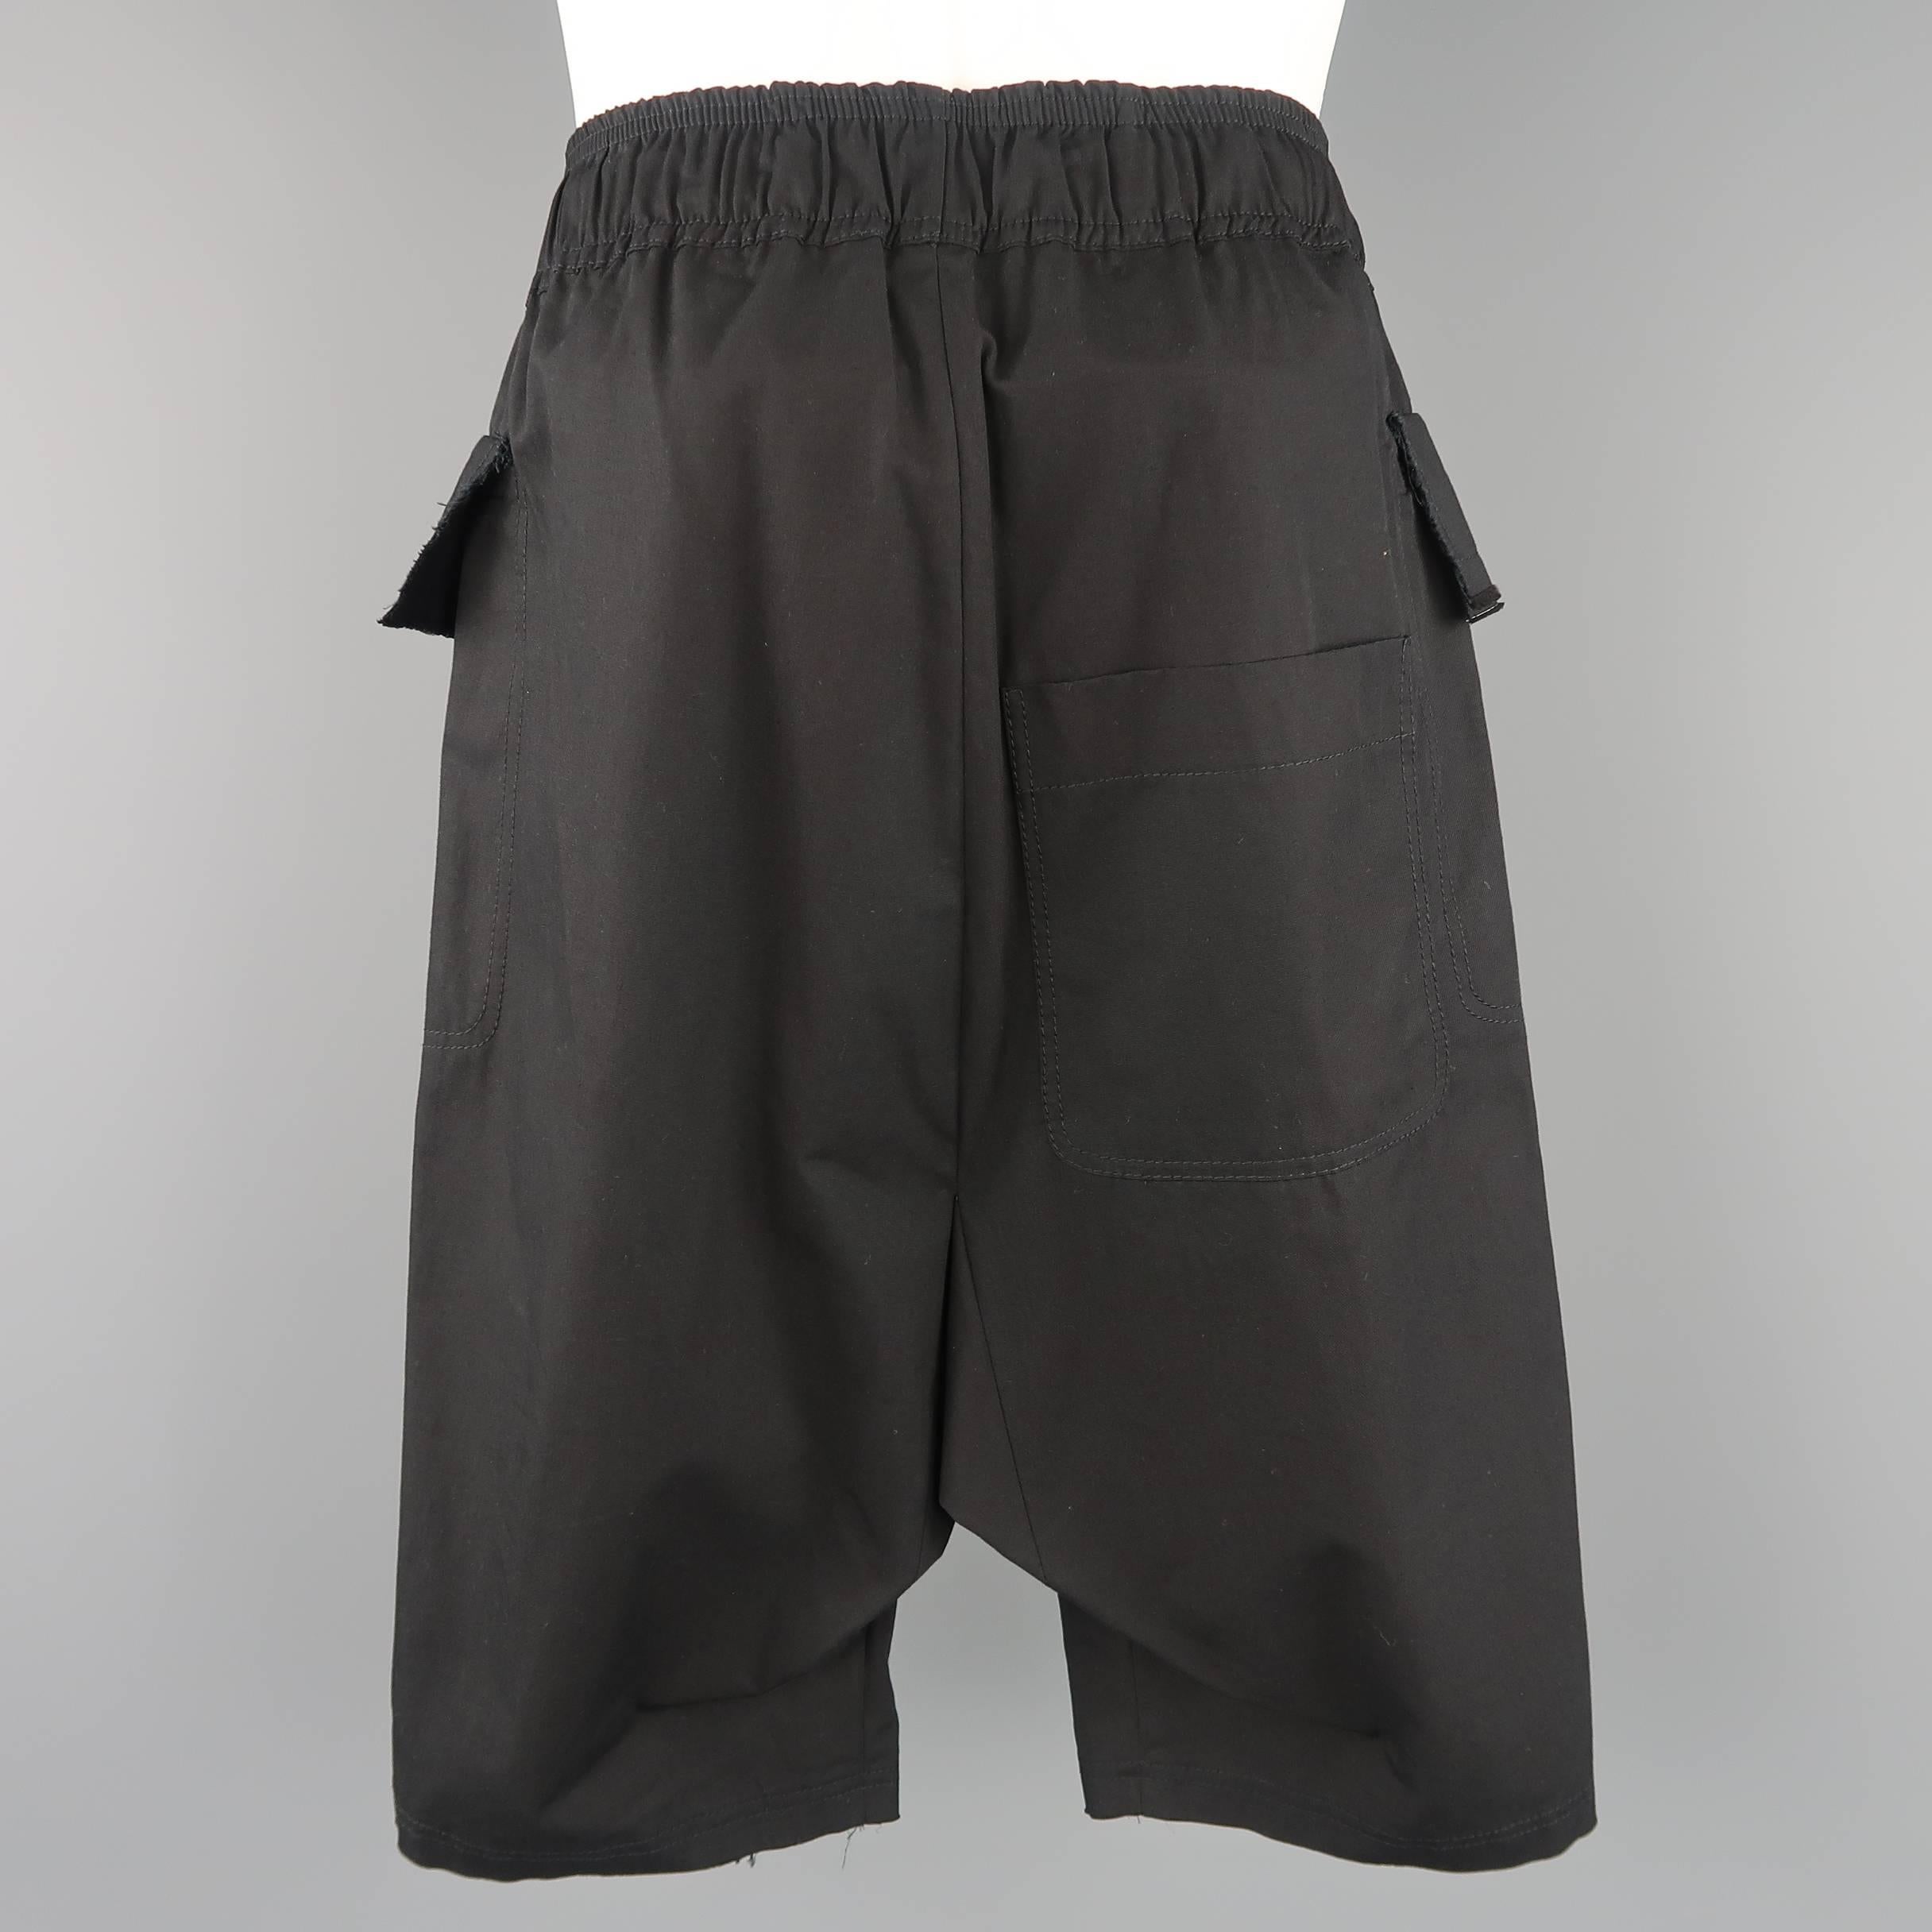 Women's or Men's Men's DAMIR DOMA Size S Black Cotton Flap Pocket Tied Drop Crotch Shorts